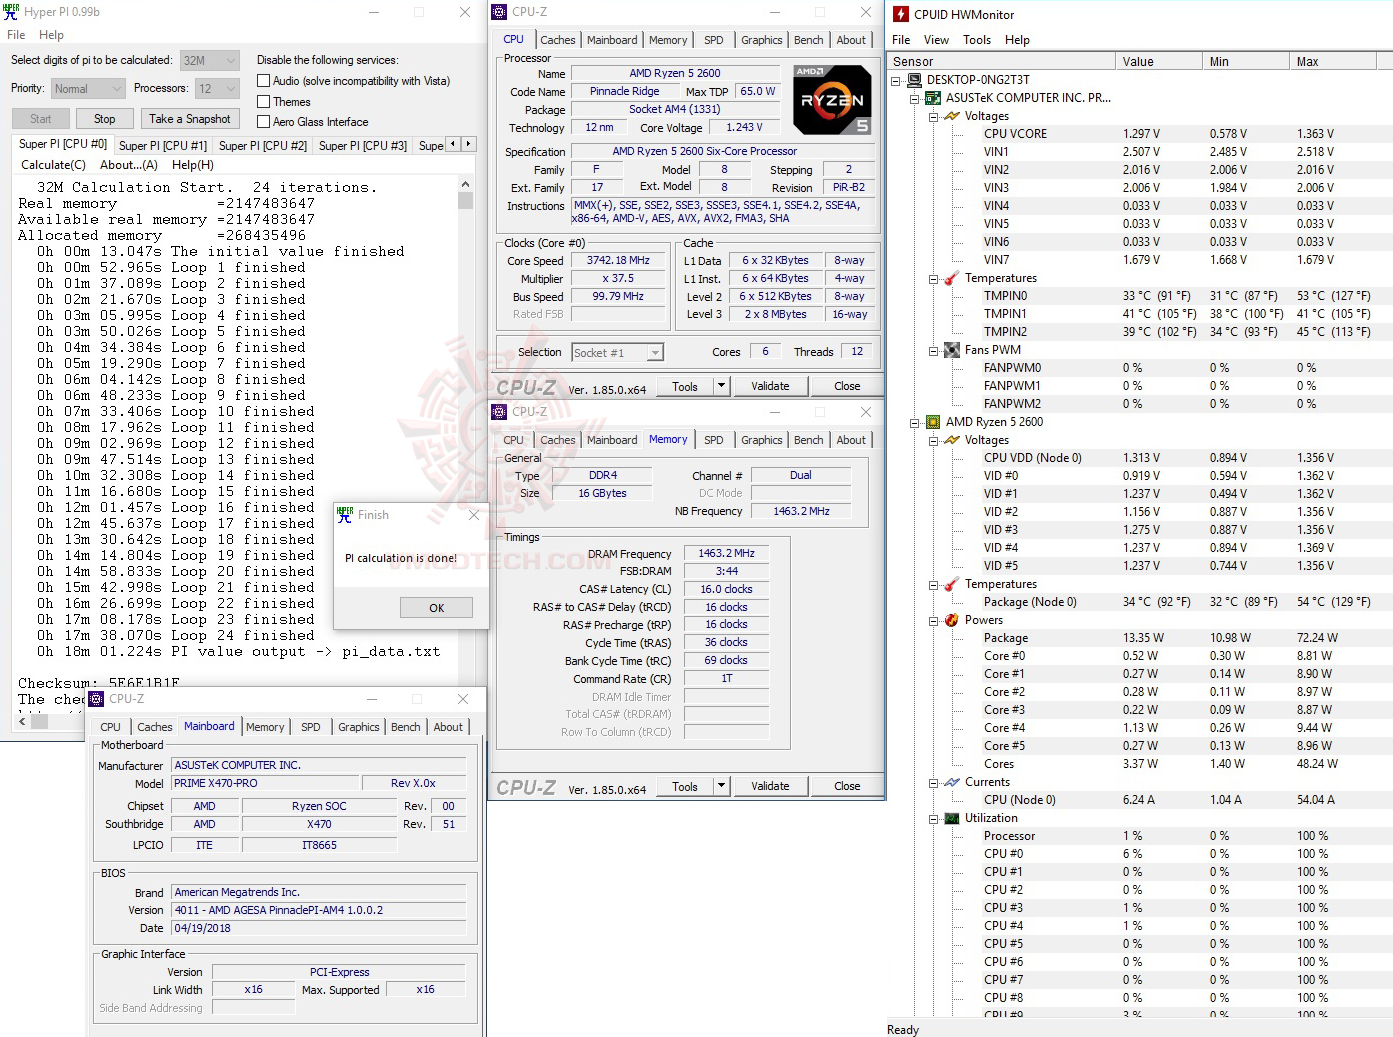 h32 1 AMD RYZEN 5 2600 PROCESSOR REVIEW